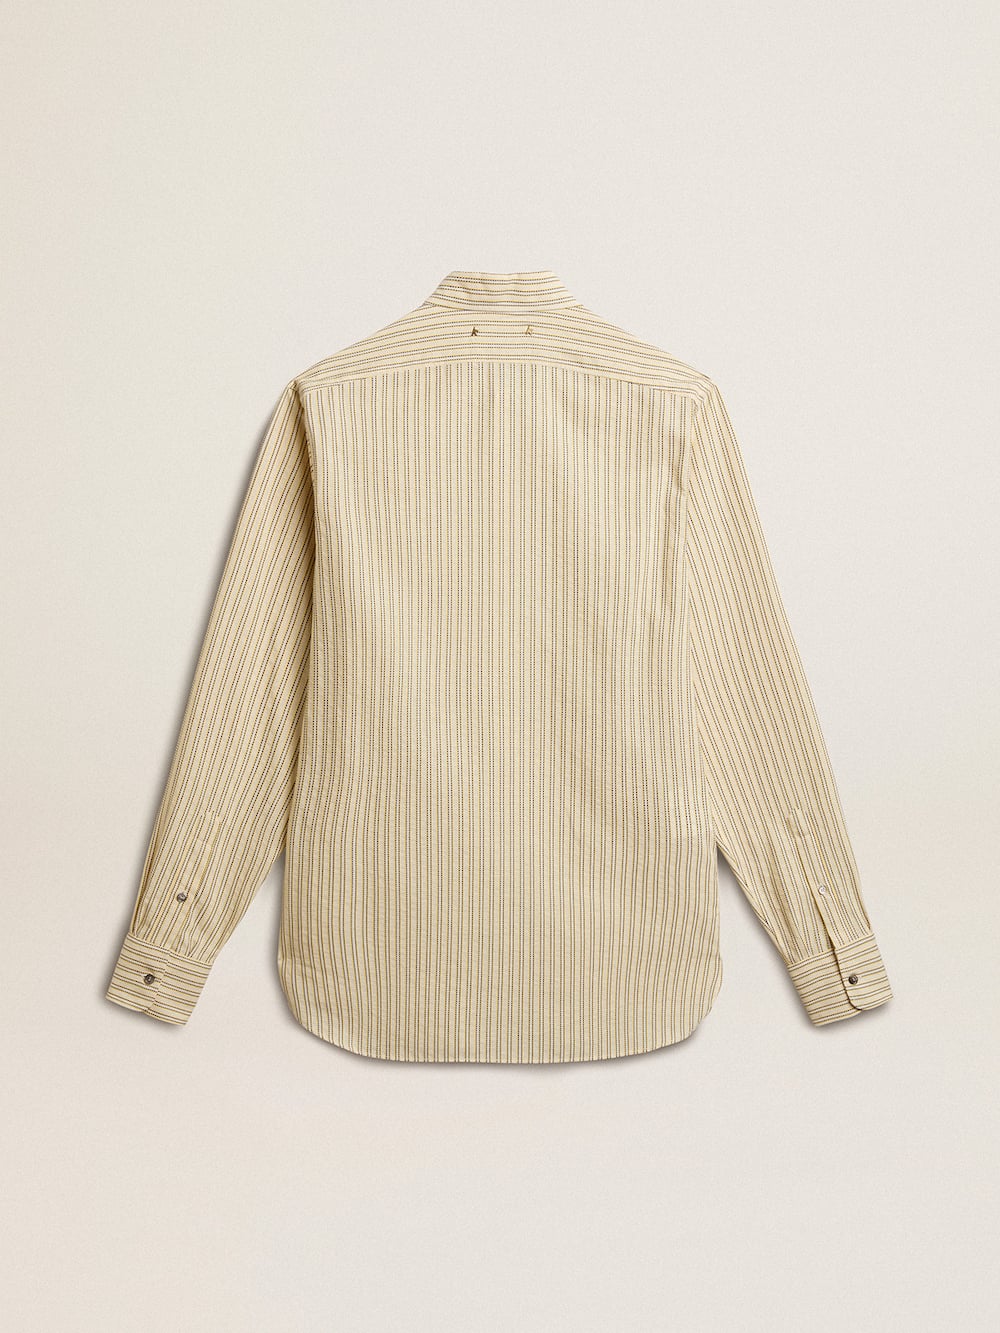 Golden Goose - Camisa de hombre de algodón en color crudo con motivo de rayas finas negras in 